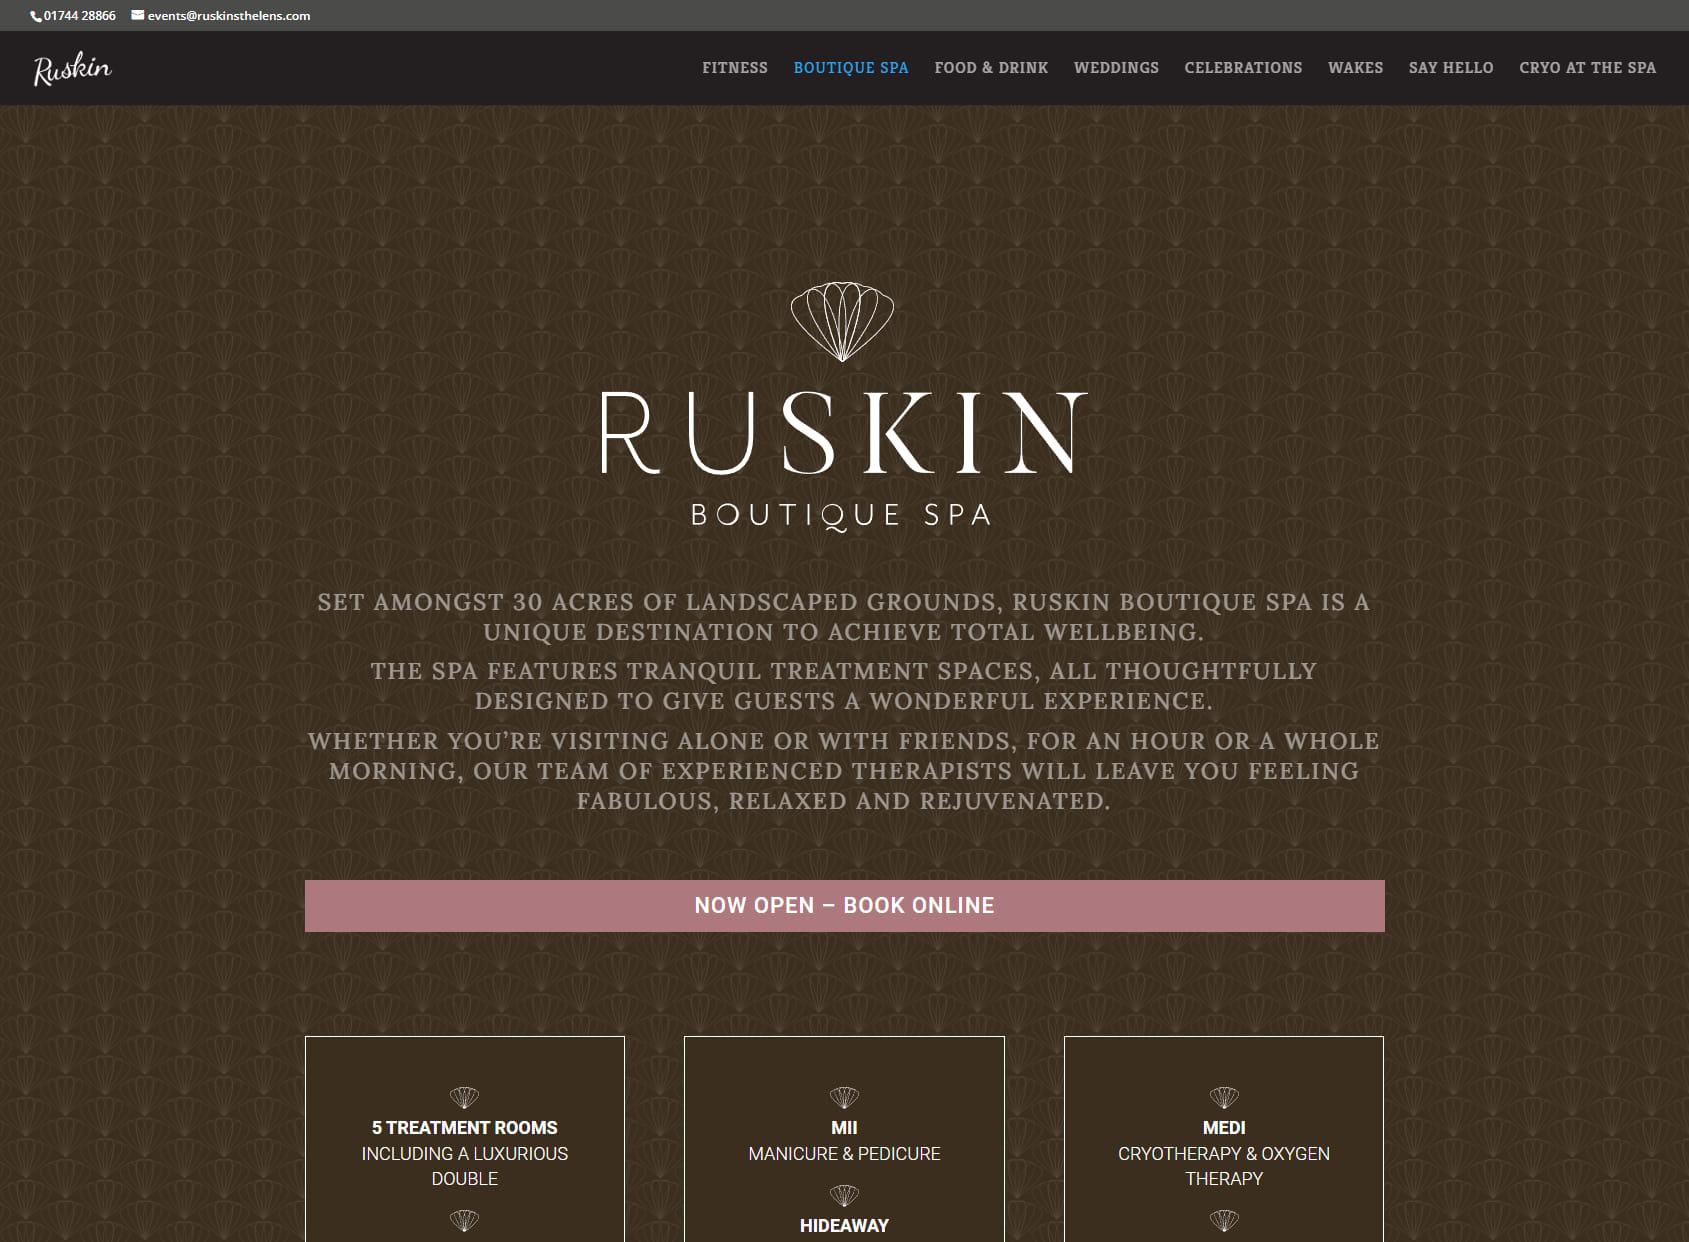 Ruskin Boutique Spa